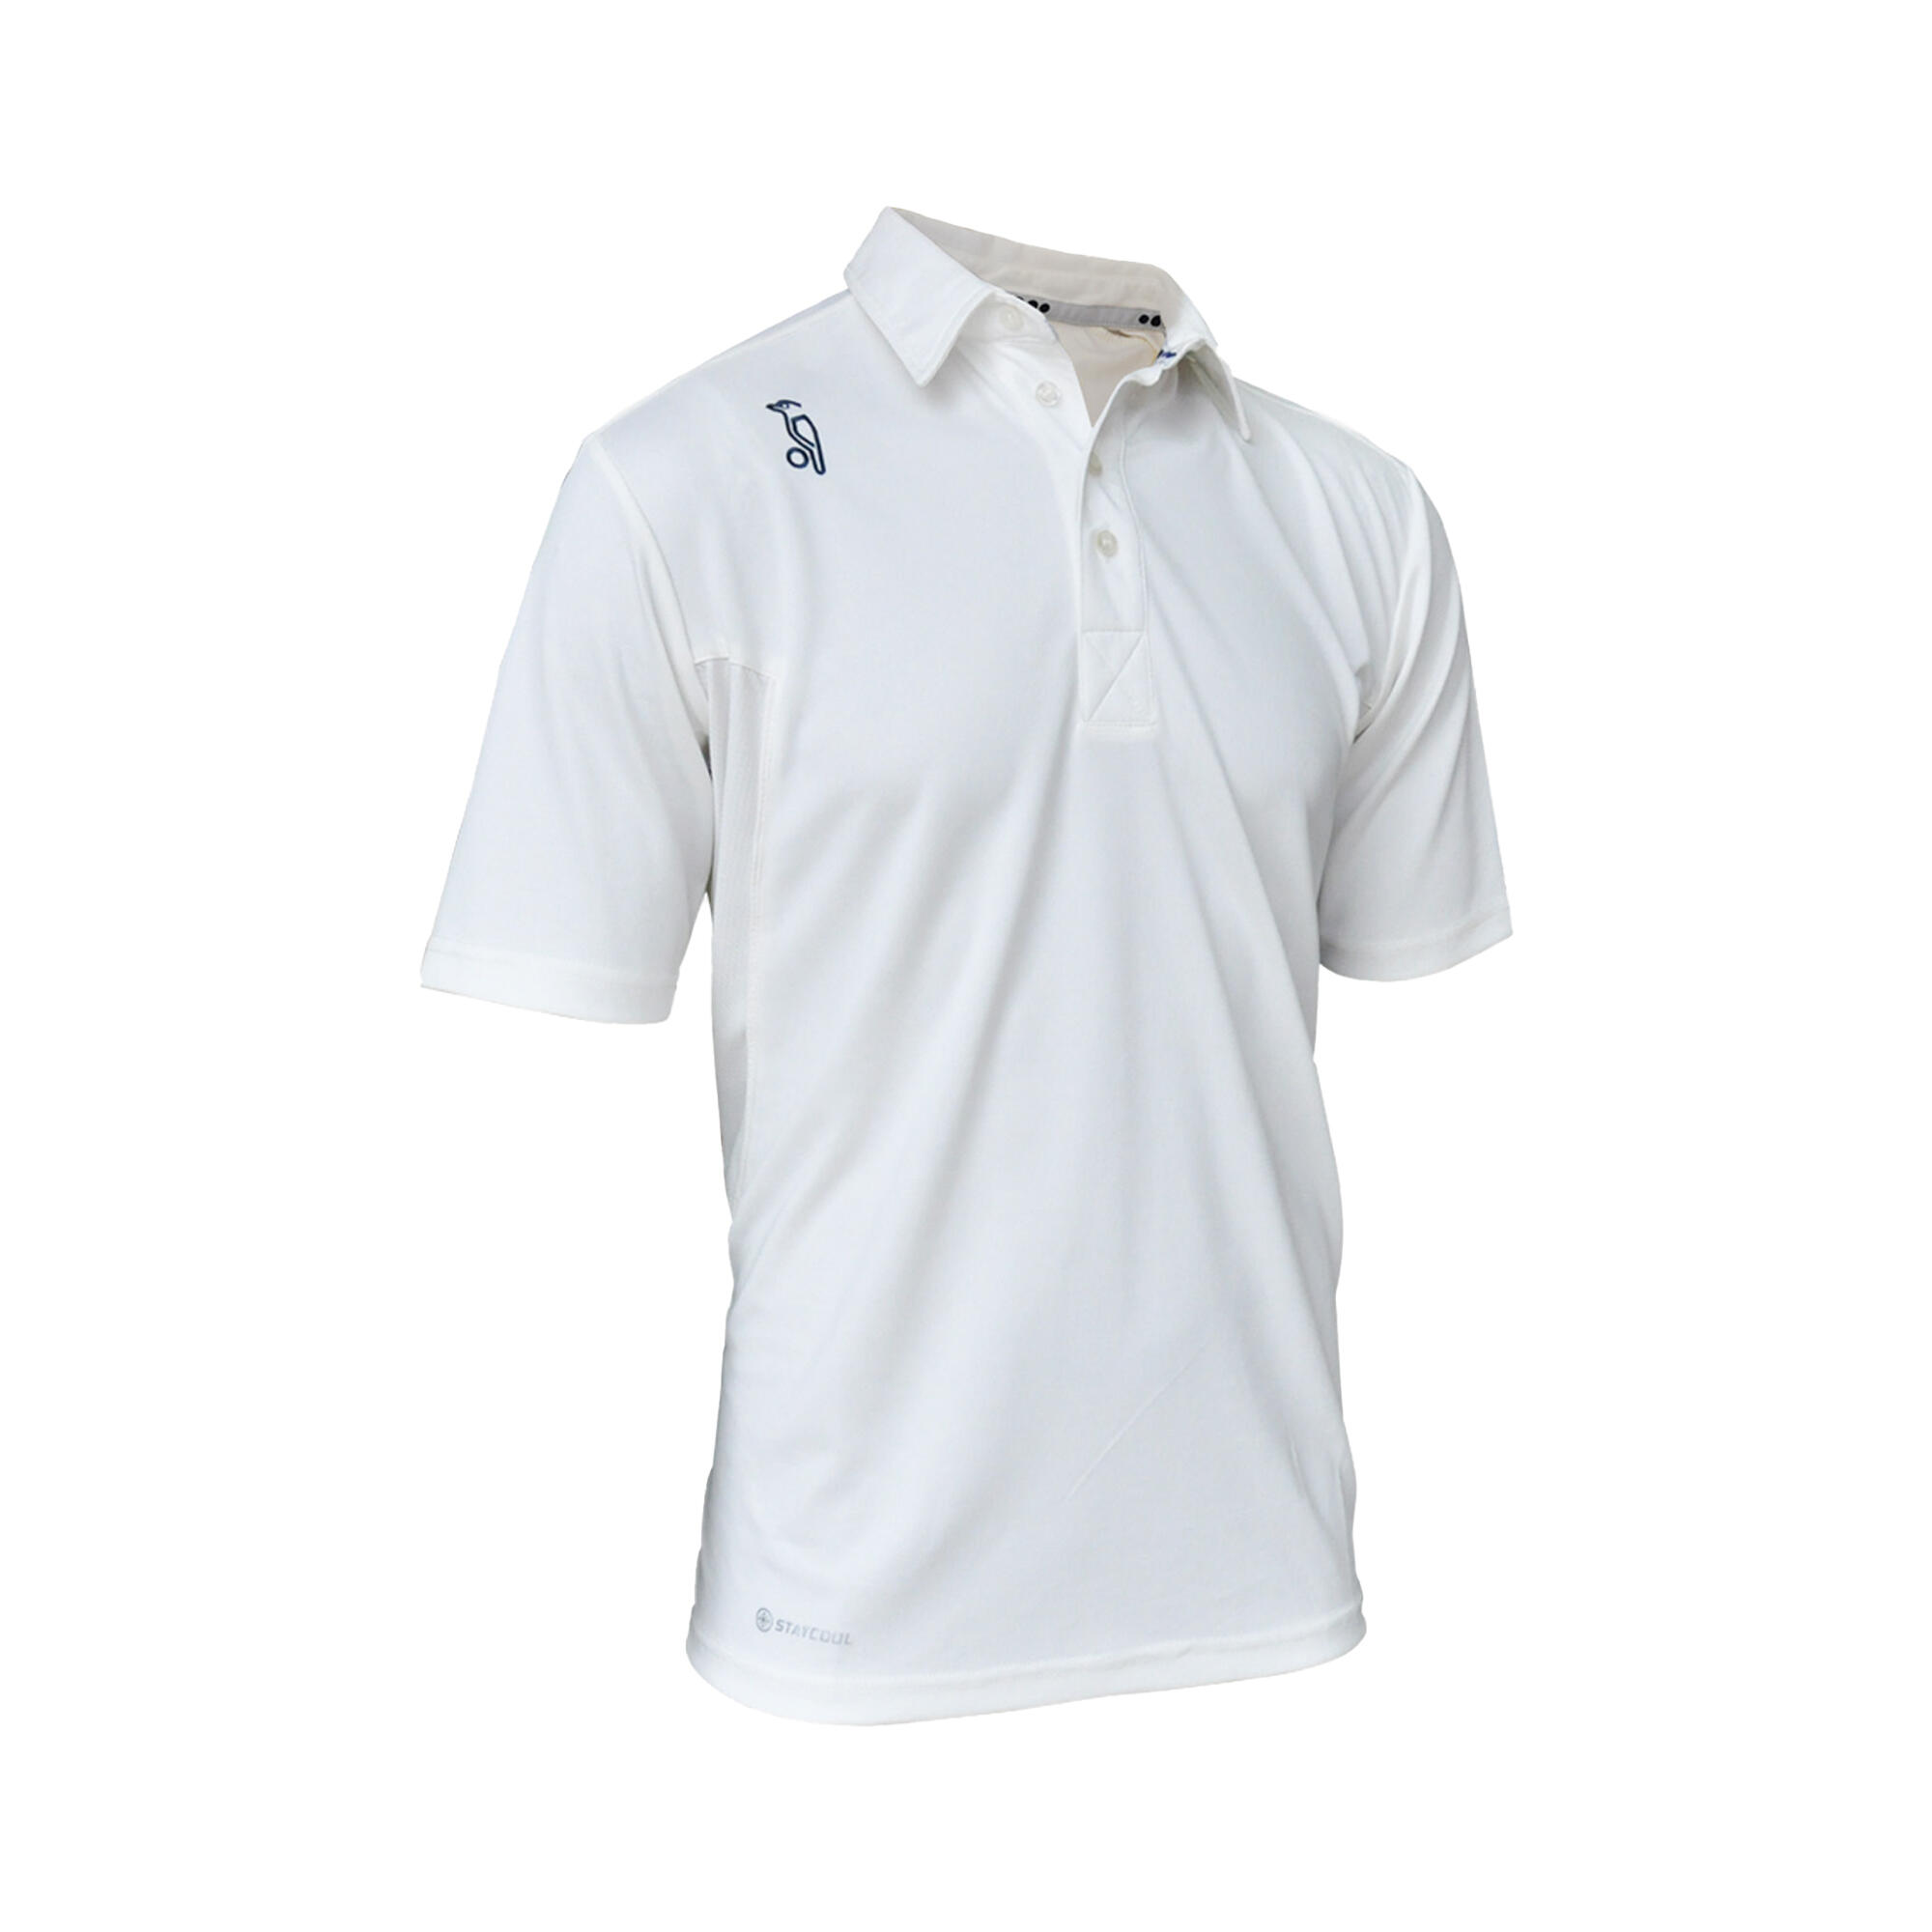 KOOKABURRA Boys Pro Players Cricket Shirt (White)